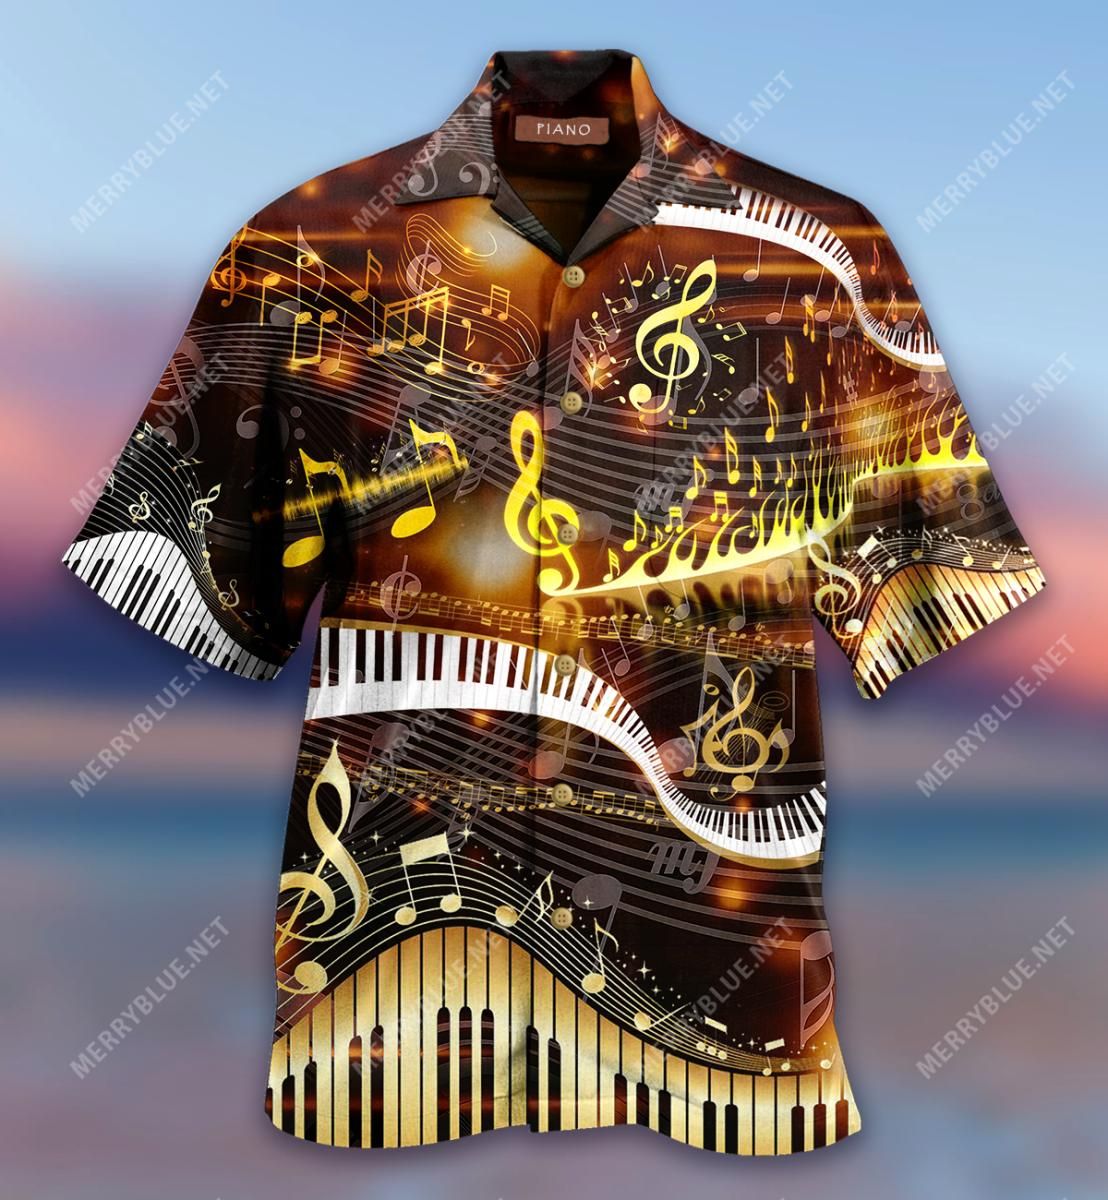 Piano Is My Life Aloha Hawaiian Shirt Colorful Short Sleeve Summer Beach Casual Shirt For Men And Women